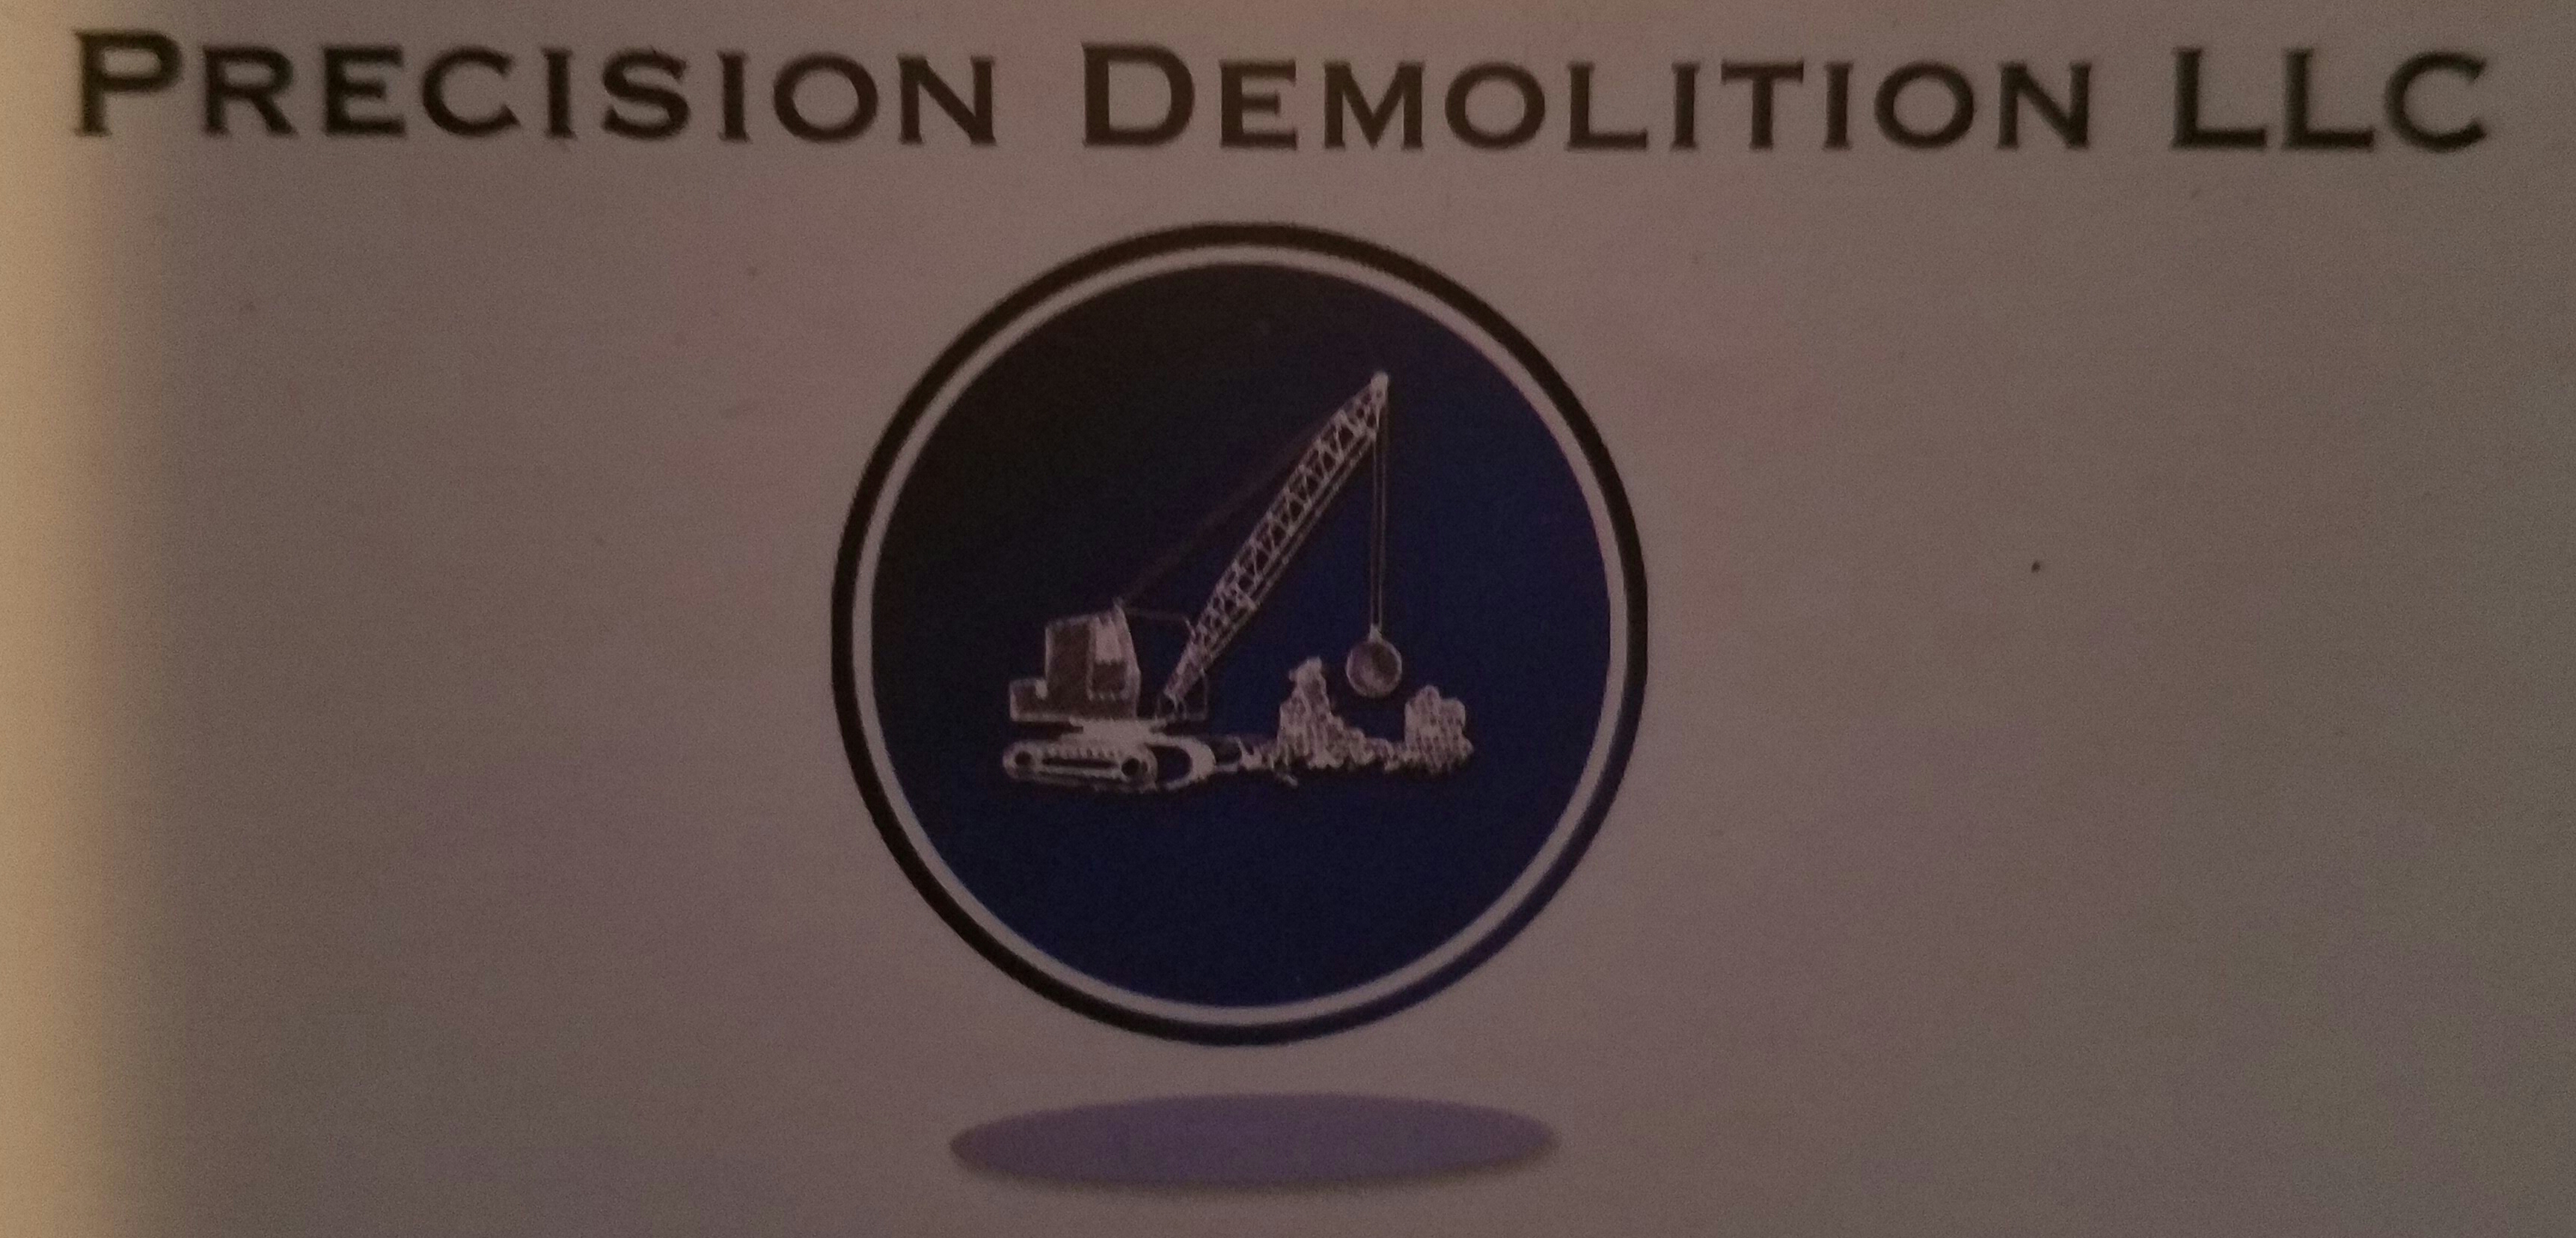 Precision Demolition, LLC Logo